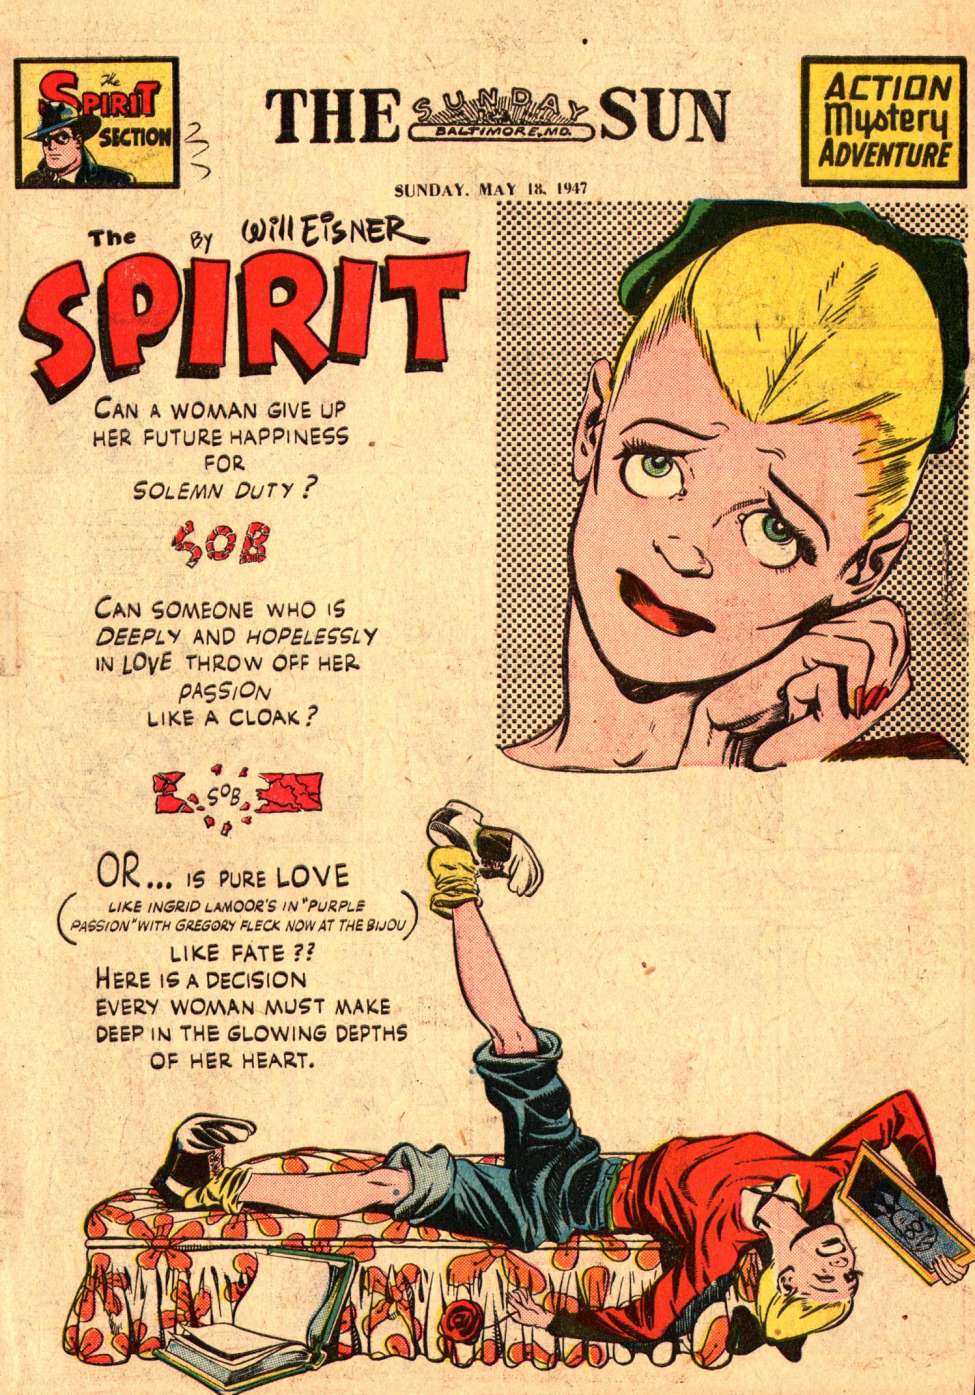 Comic Book Cover For The Spirit (1947-05-18) - Baltimore Sun